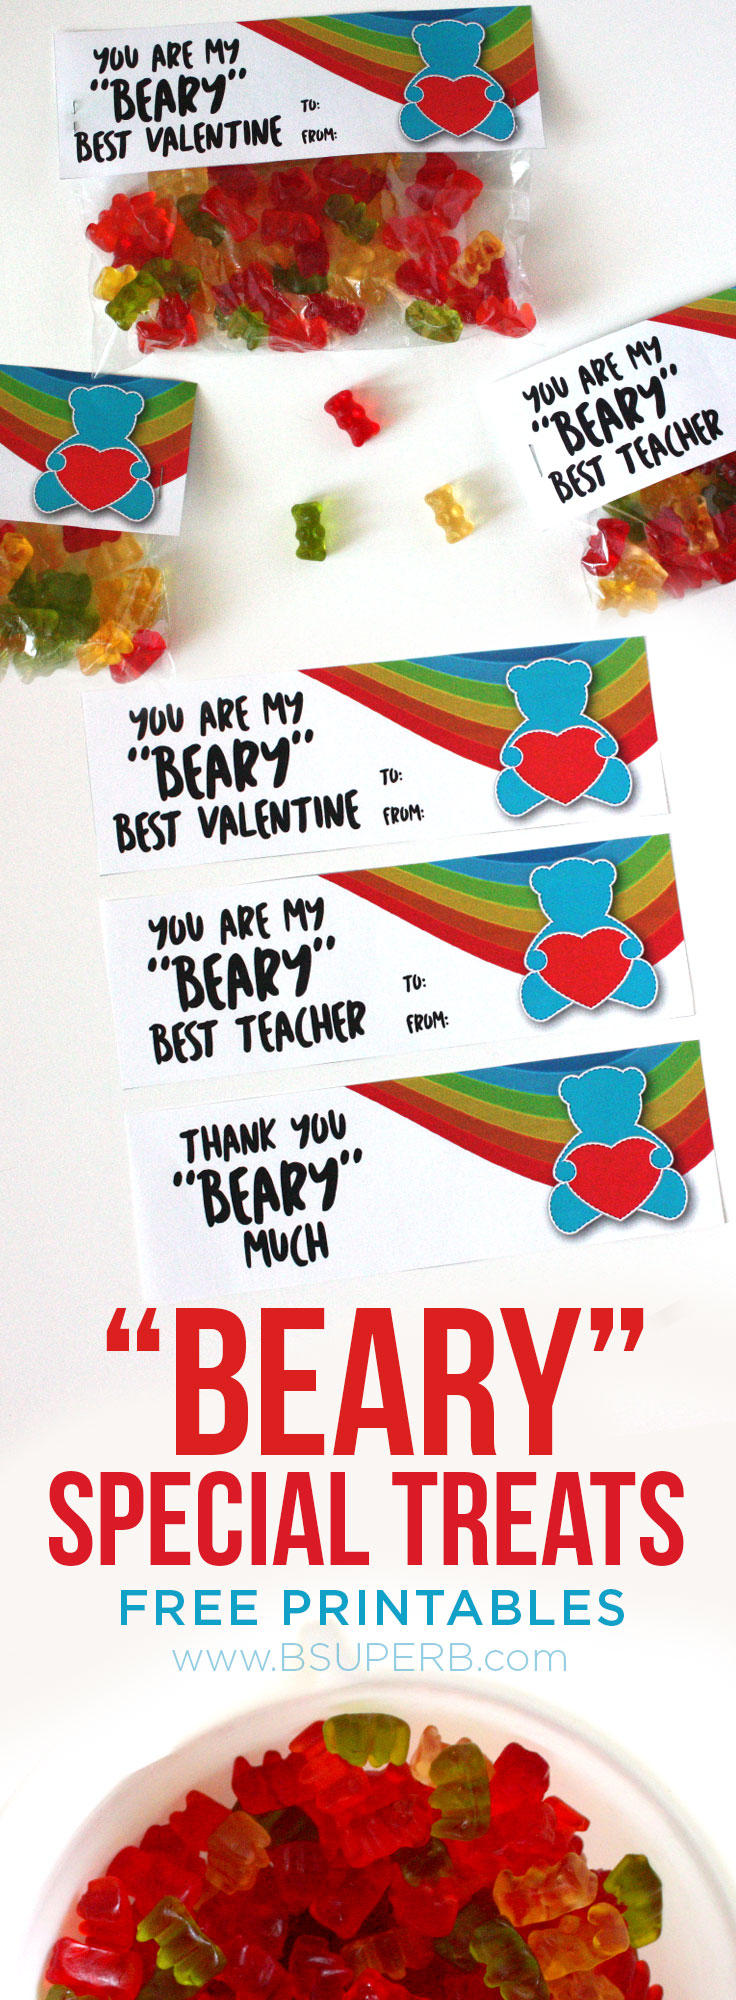 "Beary" Best Treat - Free Printable